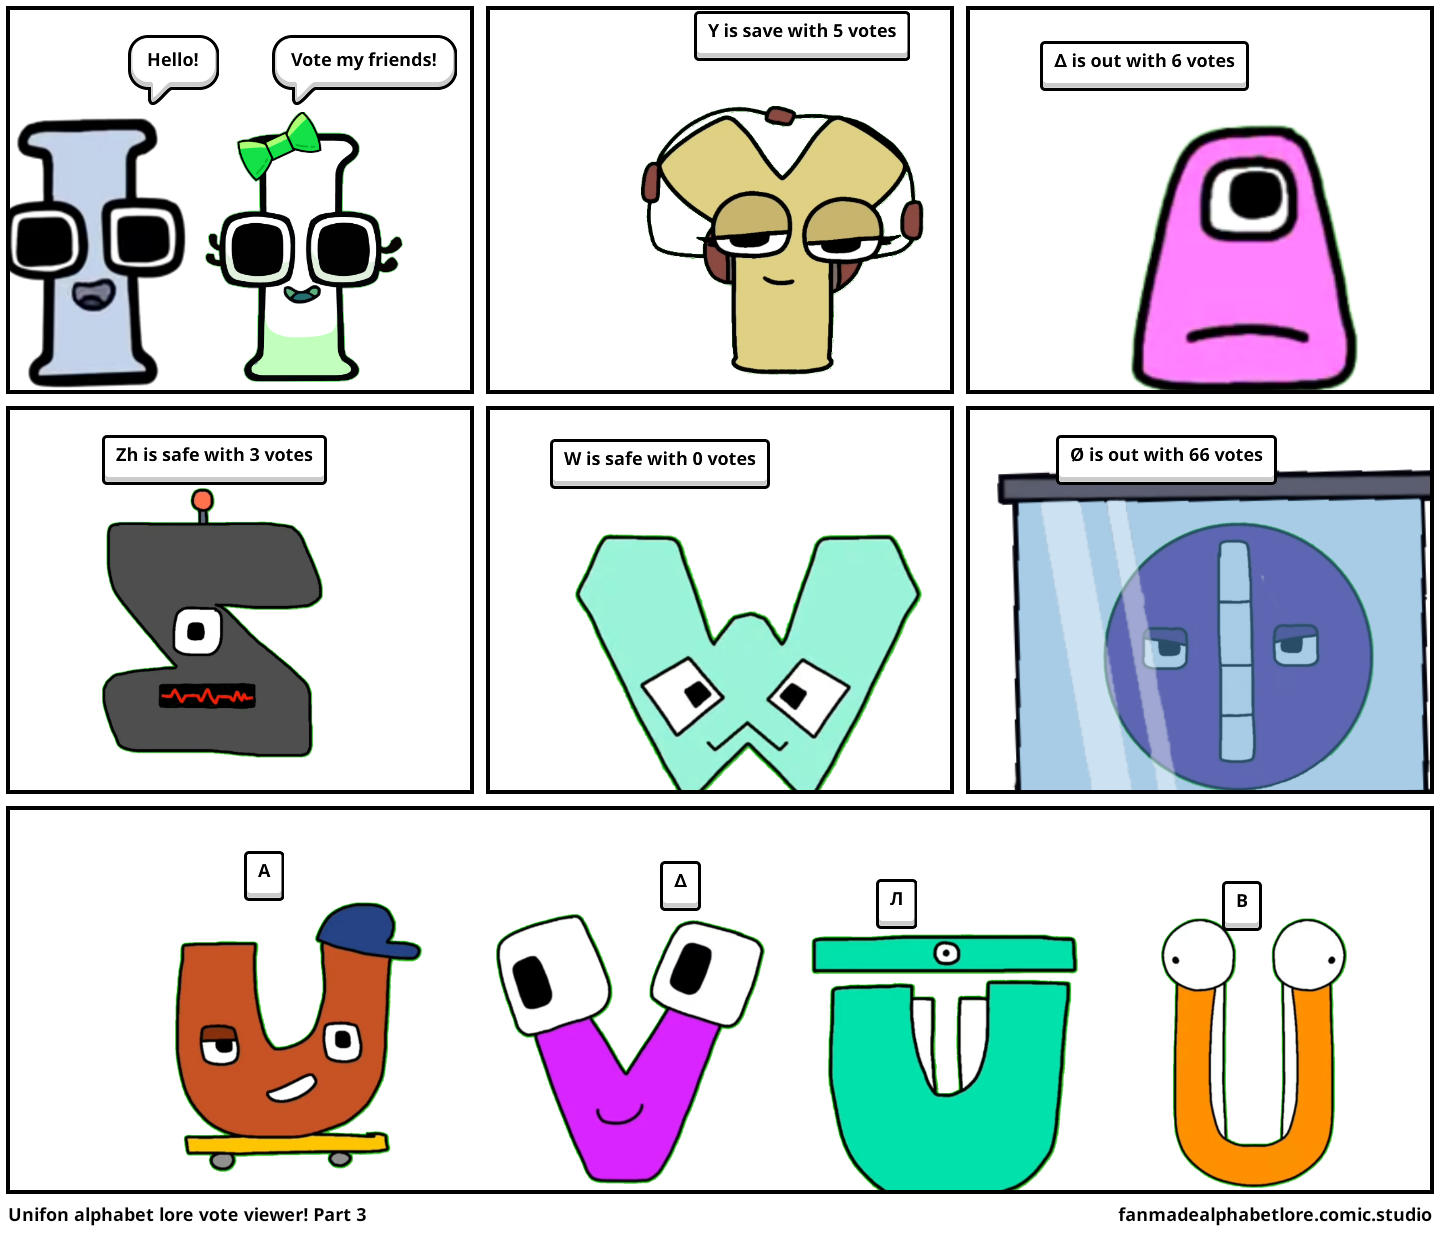 unifon alphabet lore